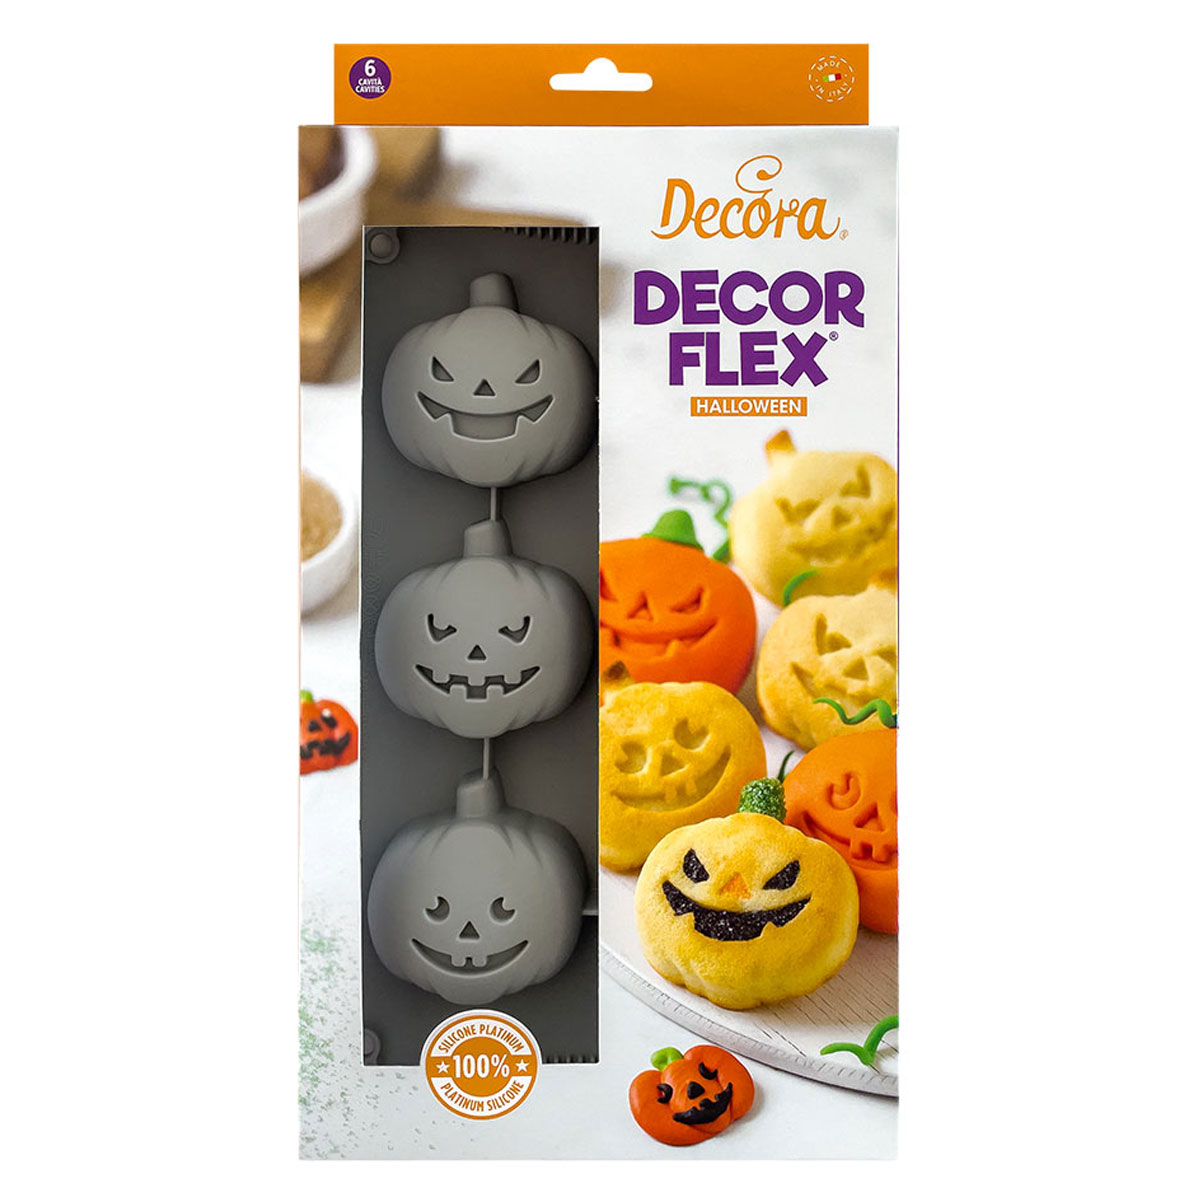 Decora Decorflex Halloween - Silikonbackform Kürbis